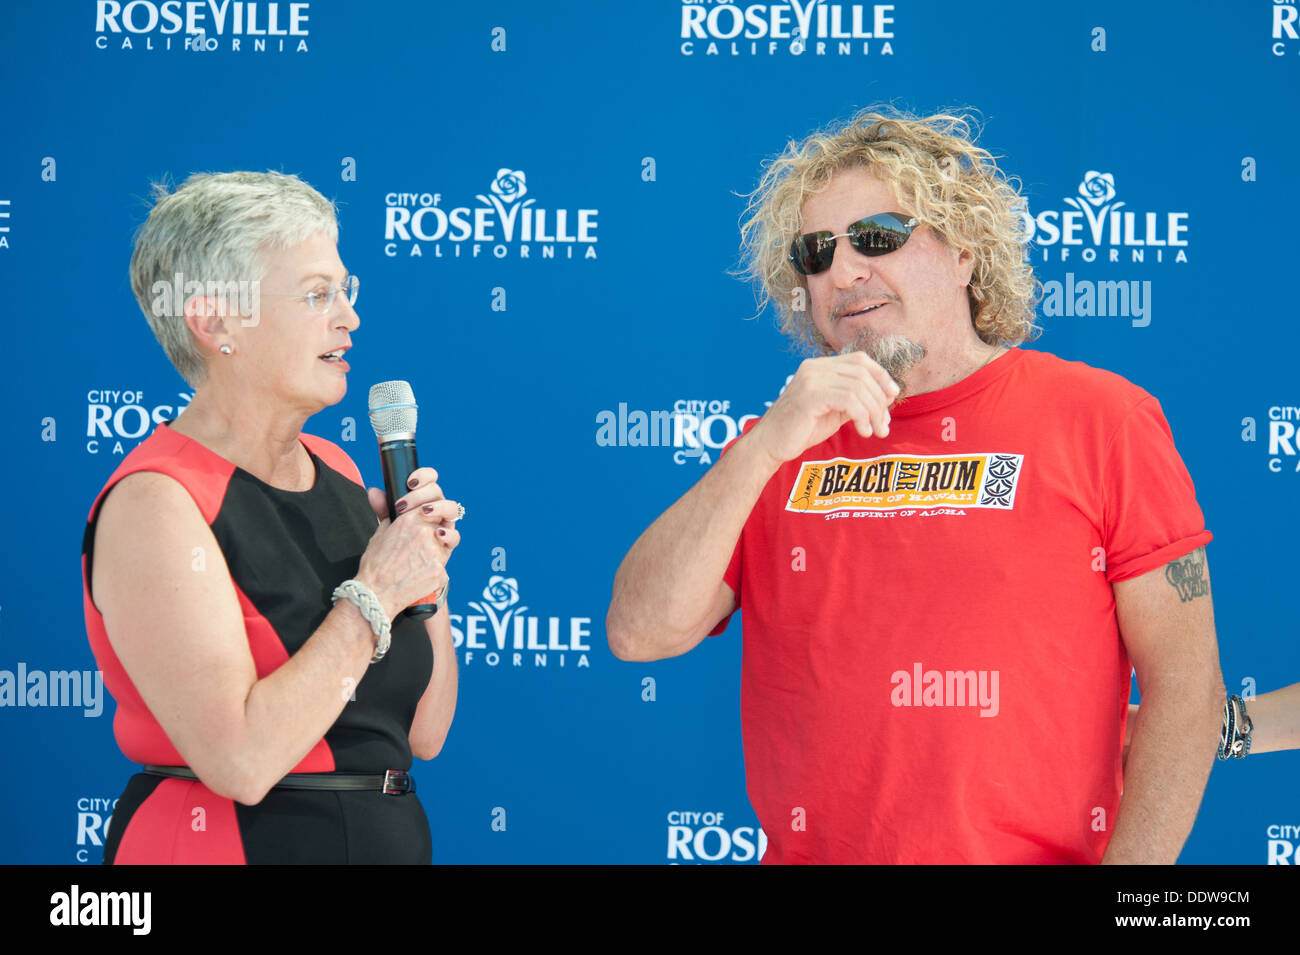 ROSEVILLE, CA - September 5: Mayor Susan Rohan introduces Sammy Hagar at Roseville's Town Sqaure in Roseville, California on September 5, 2013 Stock Photo